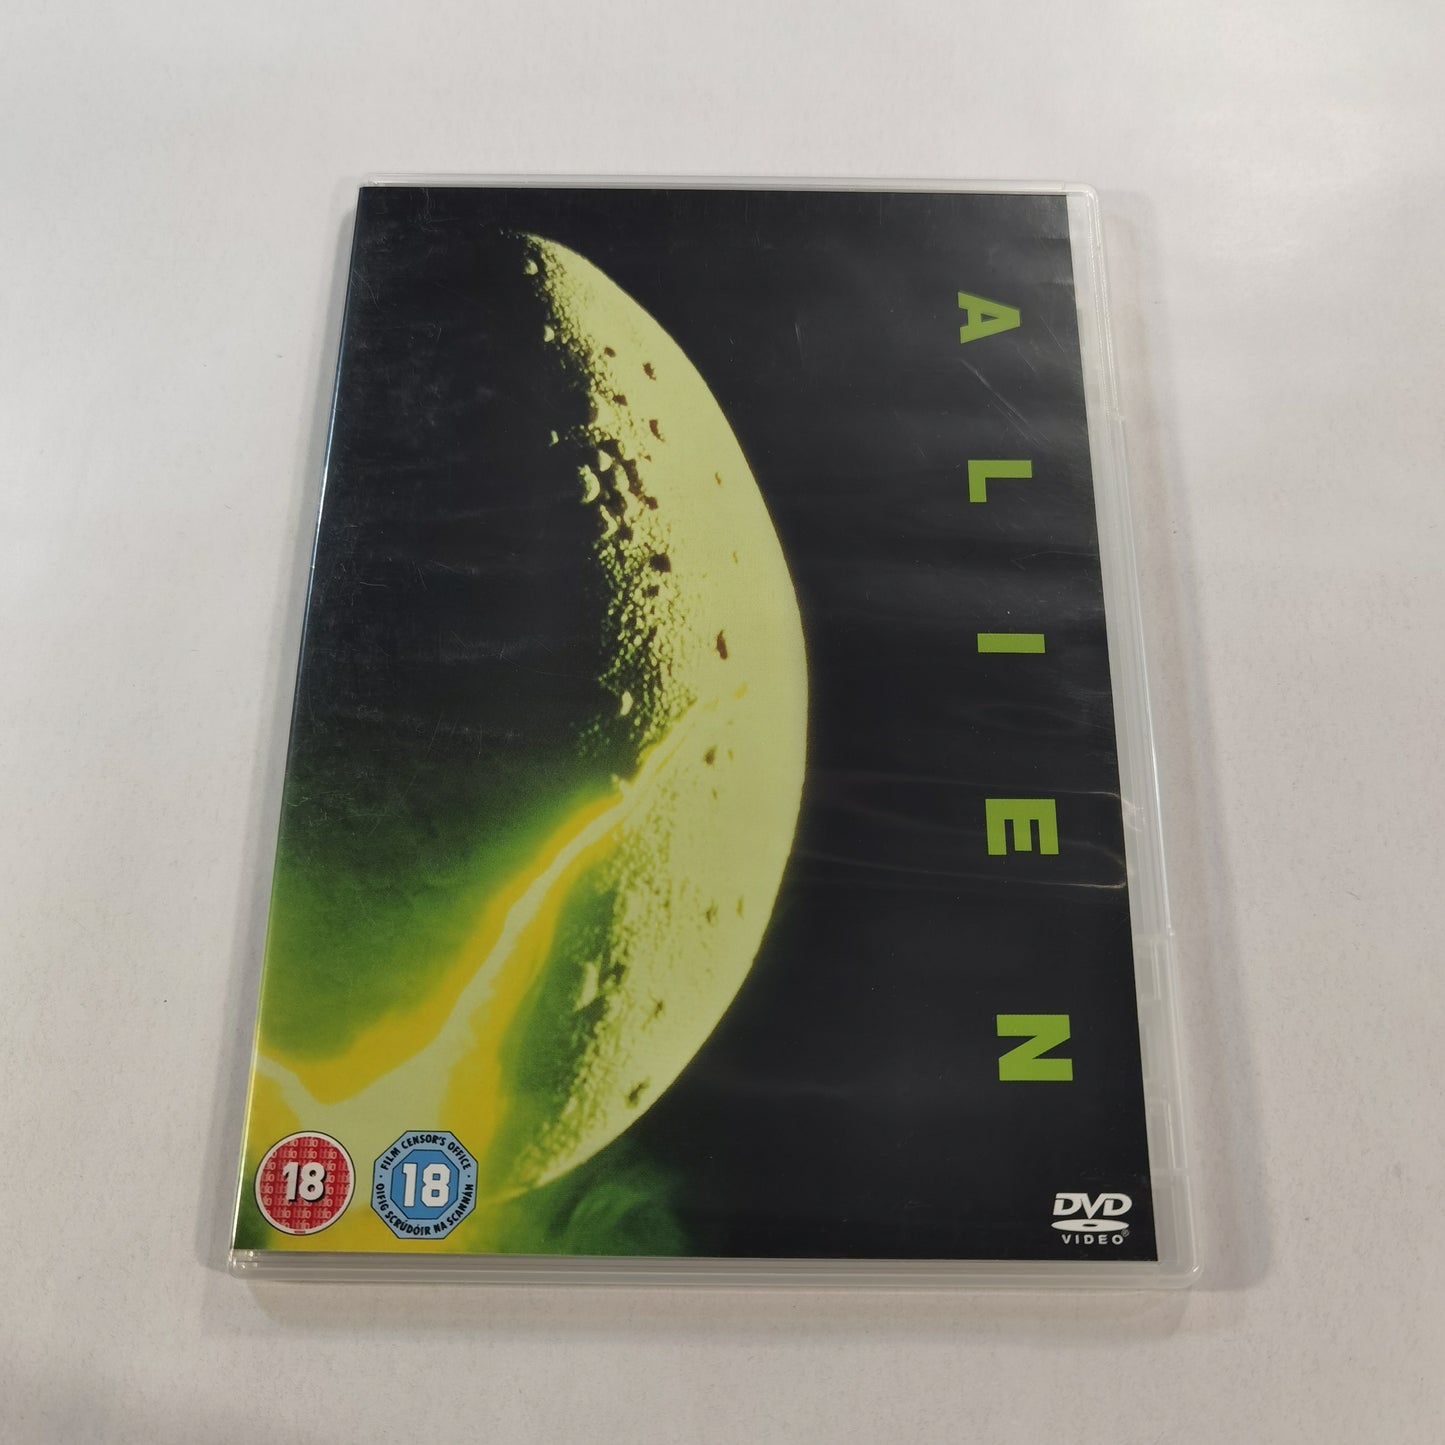 Alien (1979) - DVD UK 2008 Slim